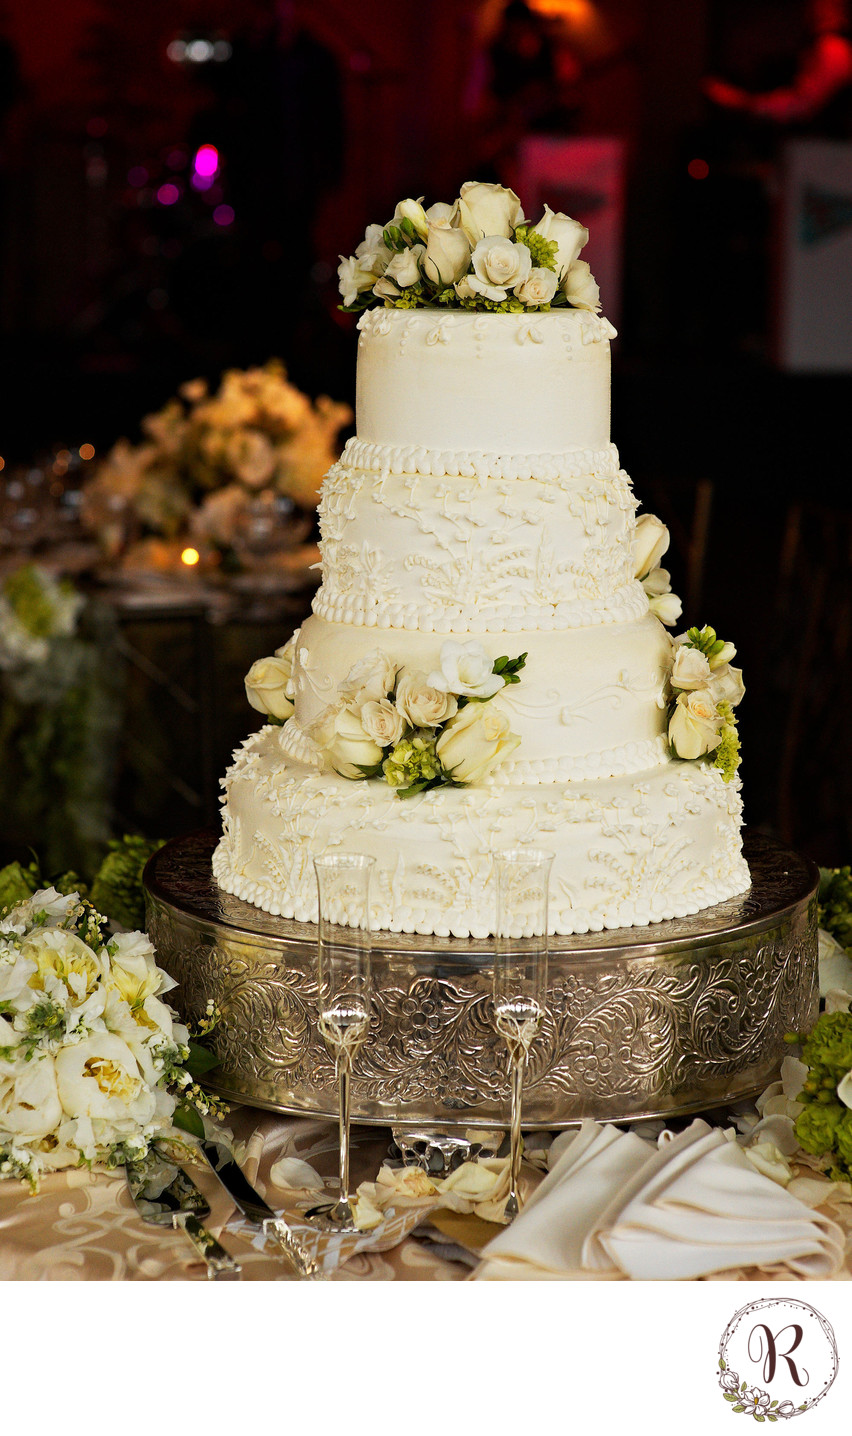 A Presidential Wedding Cake